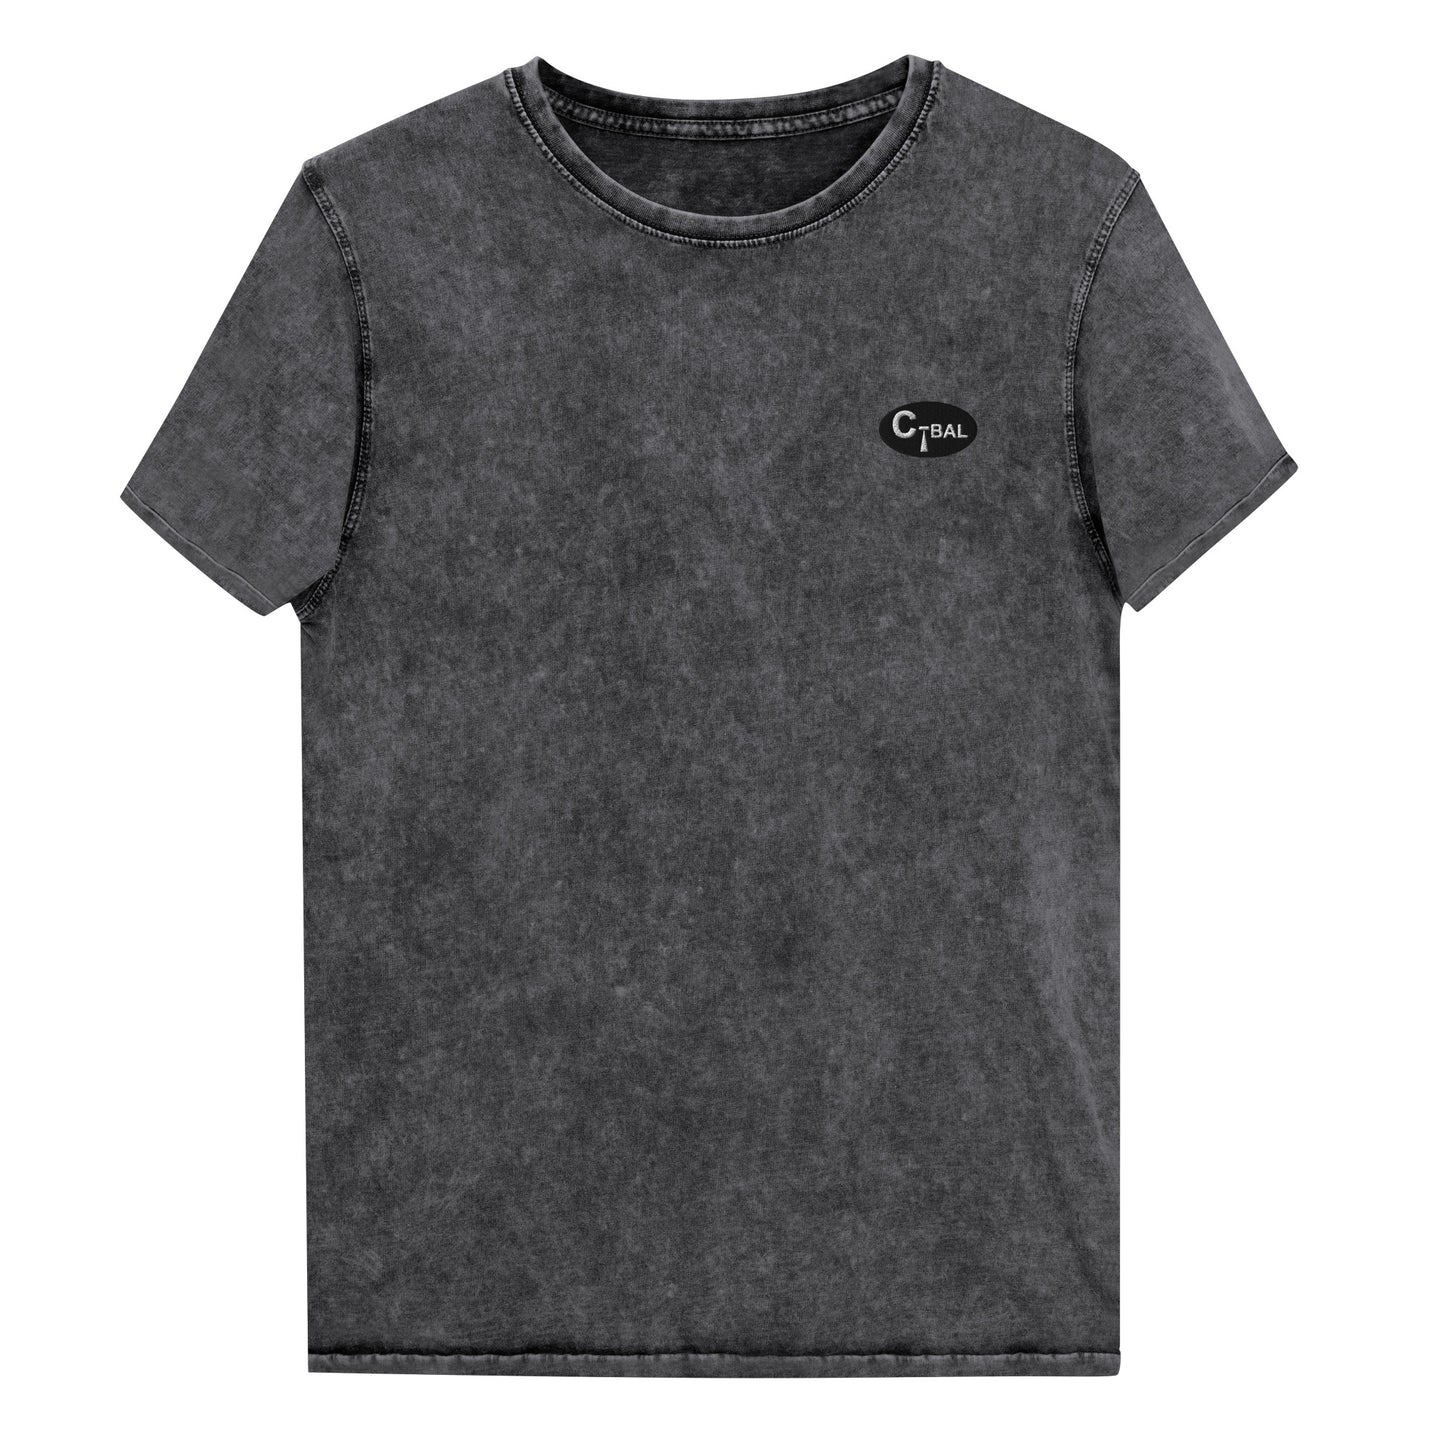 B004 - Denim T-shirt (C-BAL : Black / Embroidery Logo)